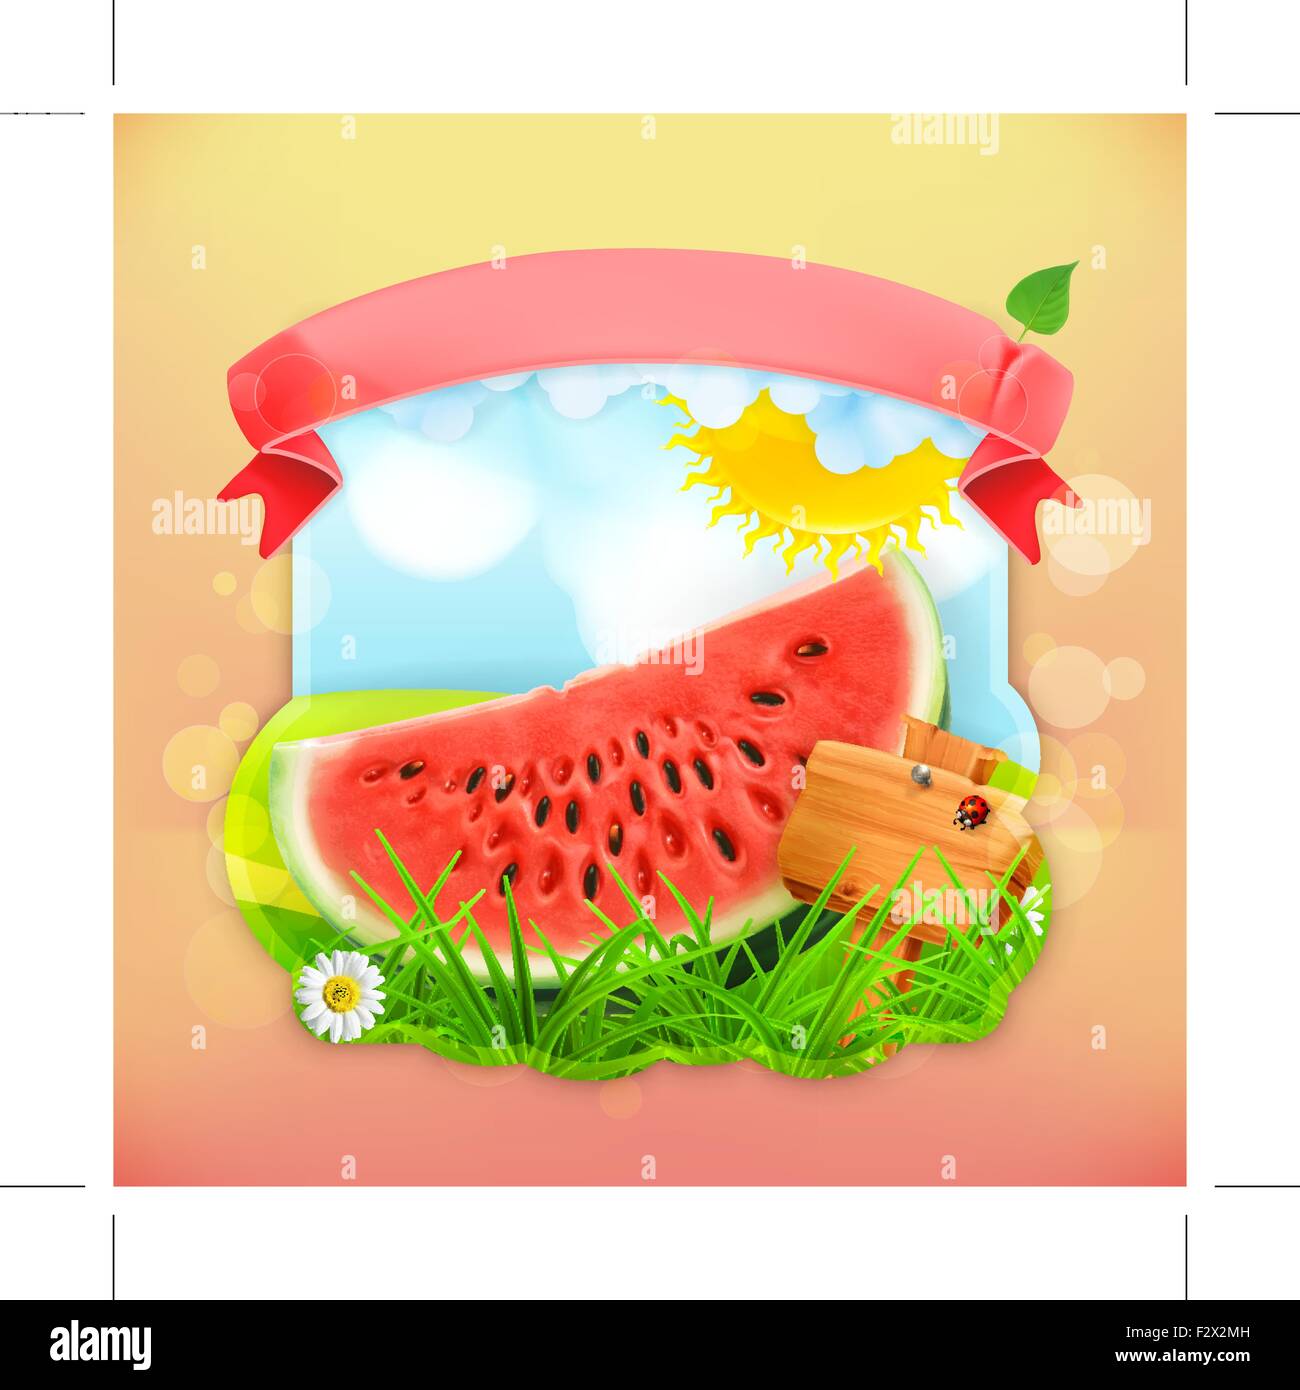 Fresh fruit label watermelon, vector illustration background for making design of a juice pack, jam jar etc Stock Vector